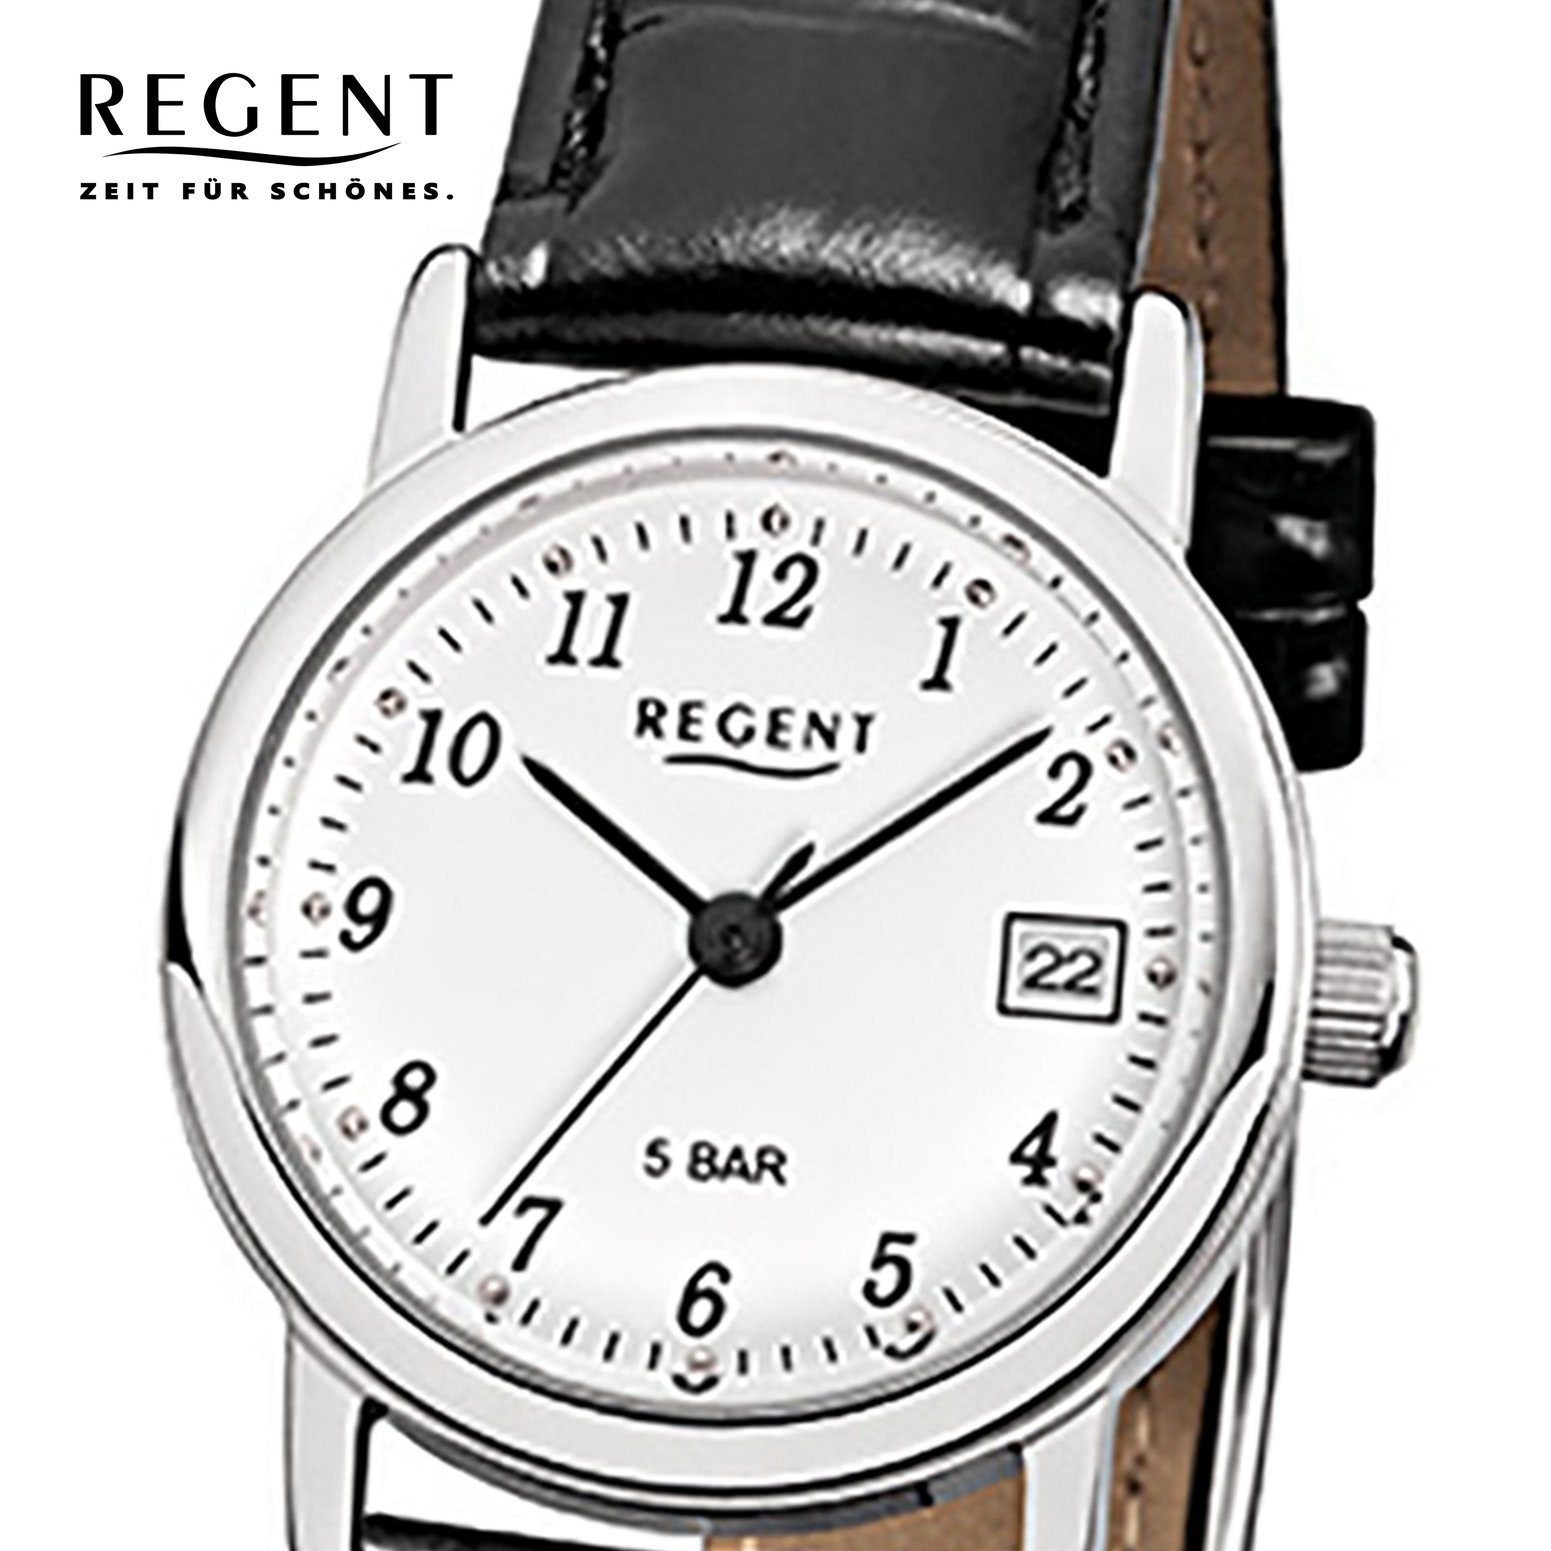 Regent schwarz 25mm), Regent Damen-Armbanduhr Armbanduhr Quarzuhr (ca. Analog, Lederarmband klein rund, Damen